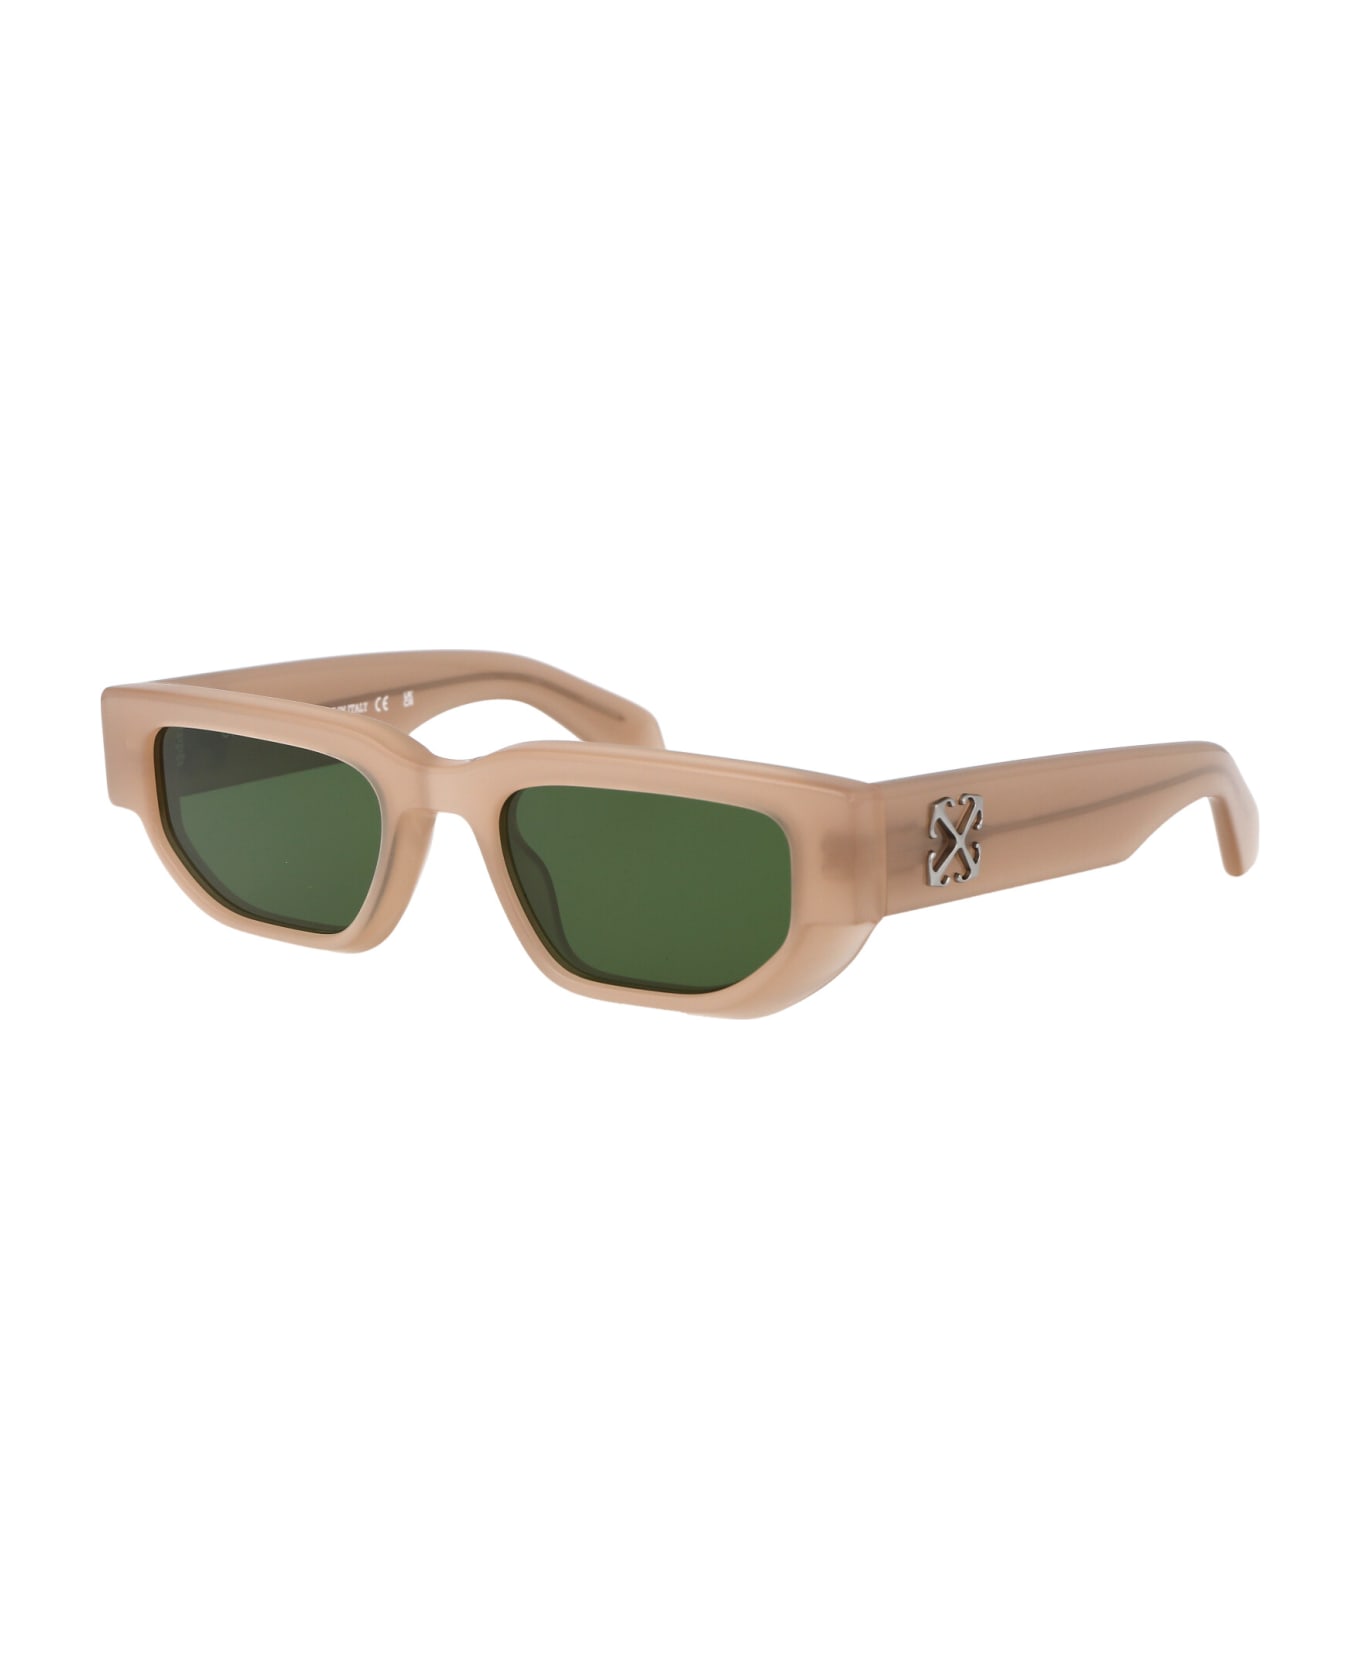 Off-White Greeley Sunglasses - 1755 SAND  サングラス